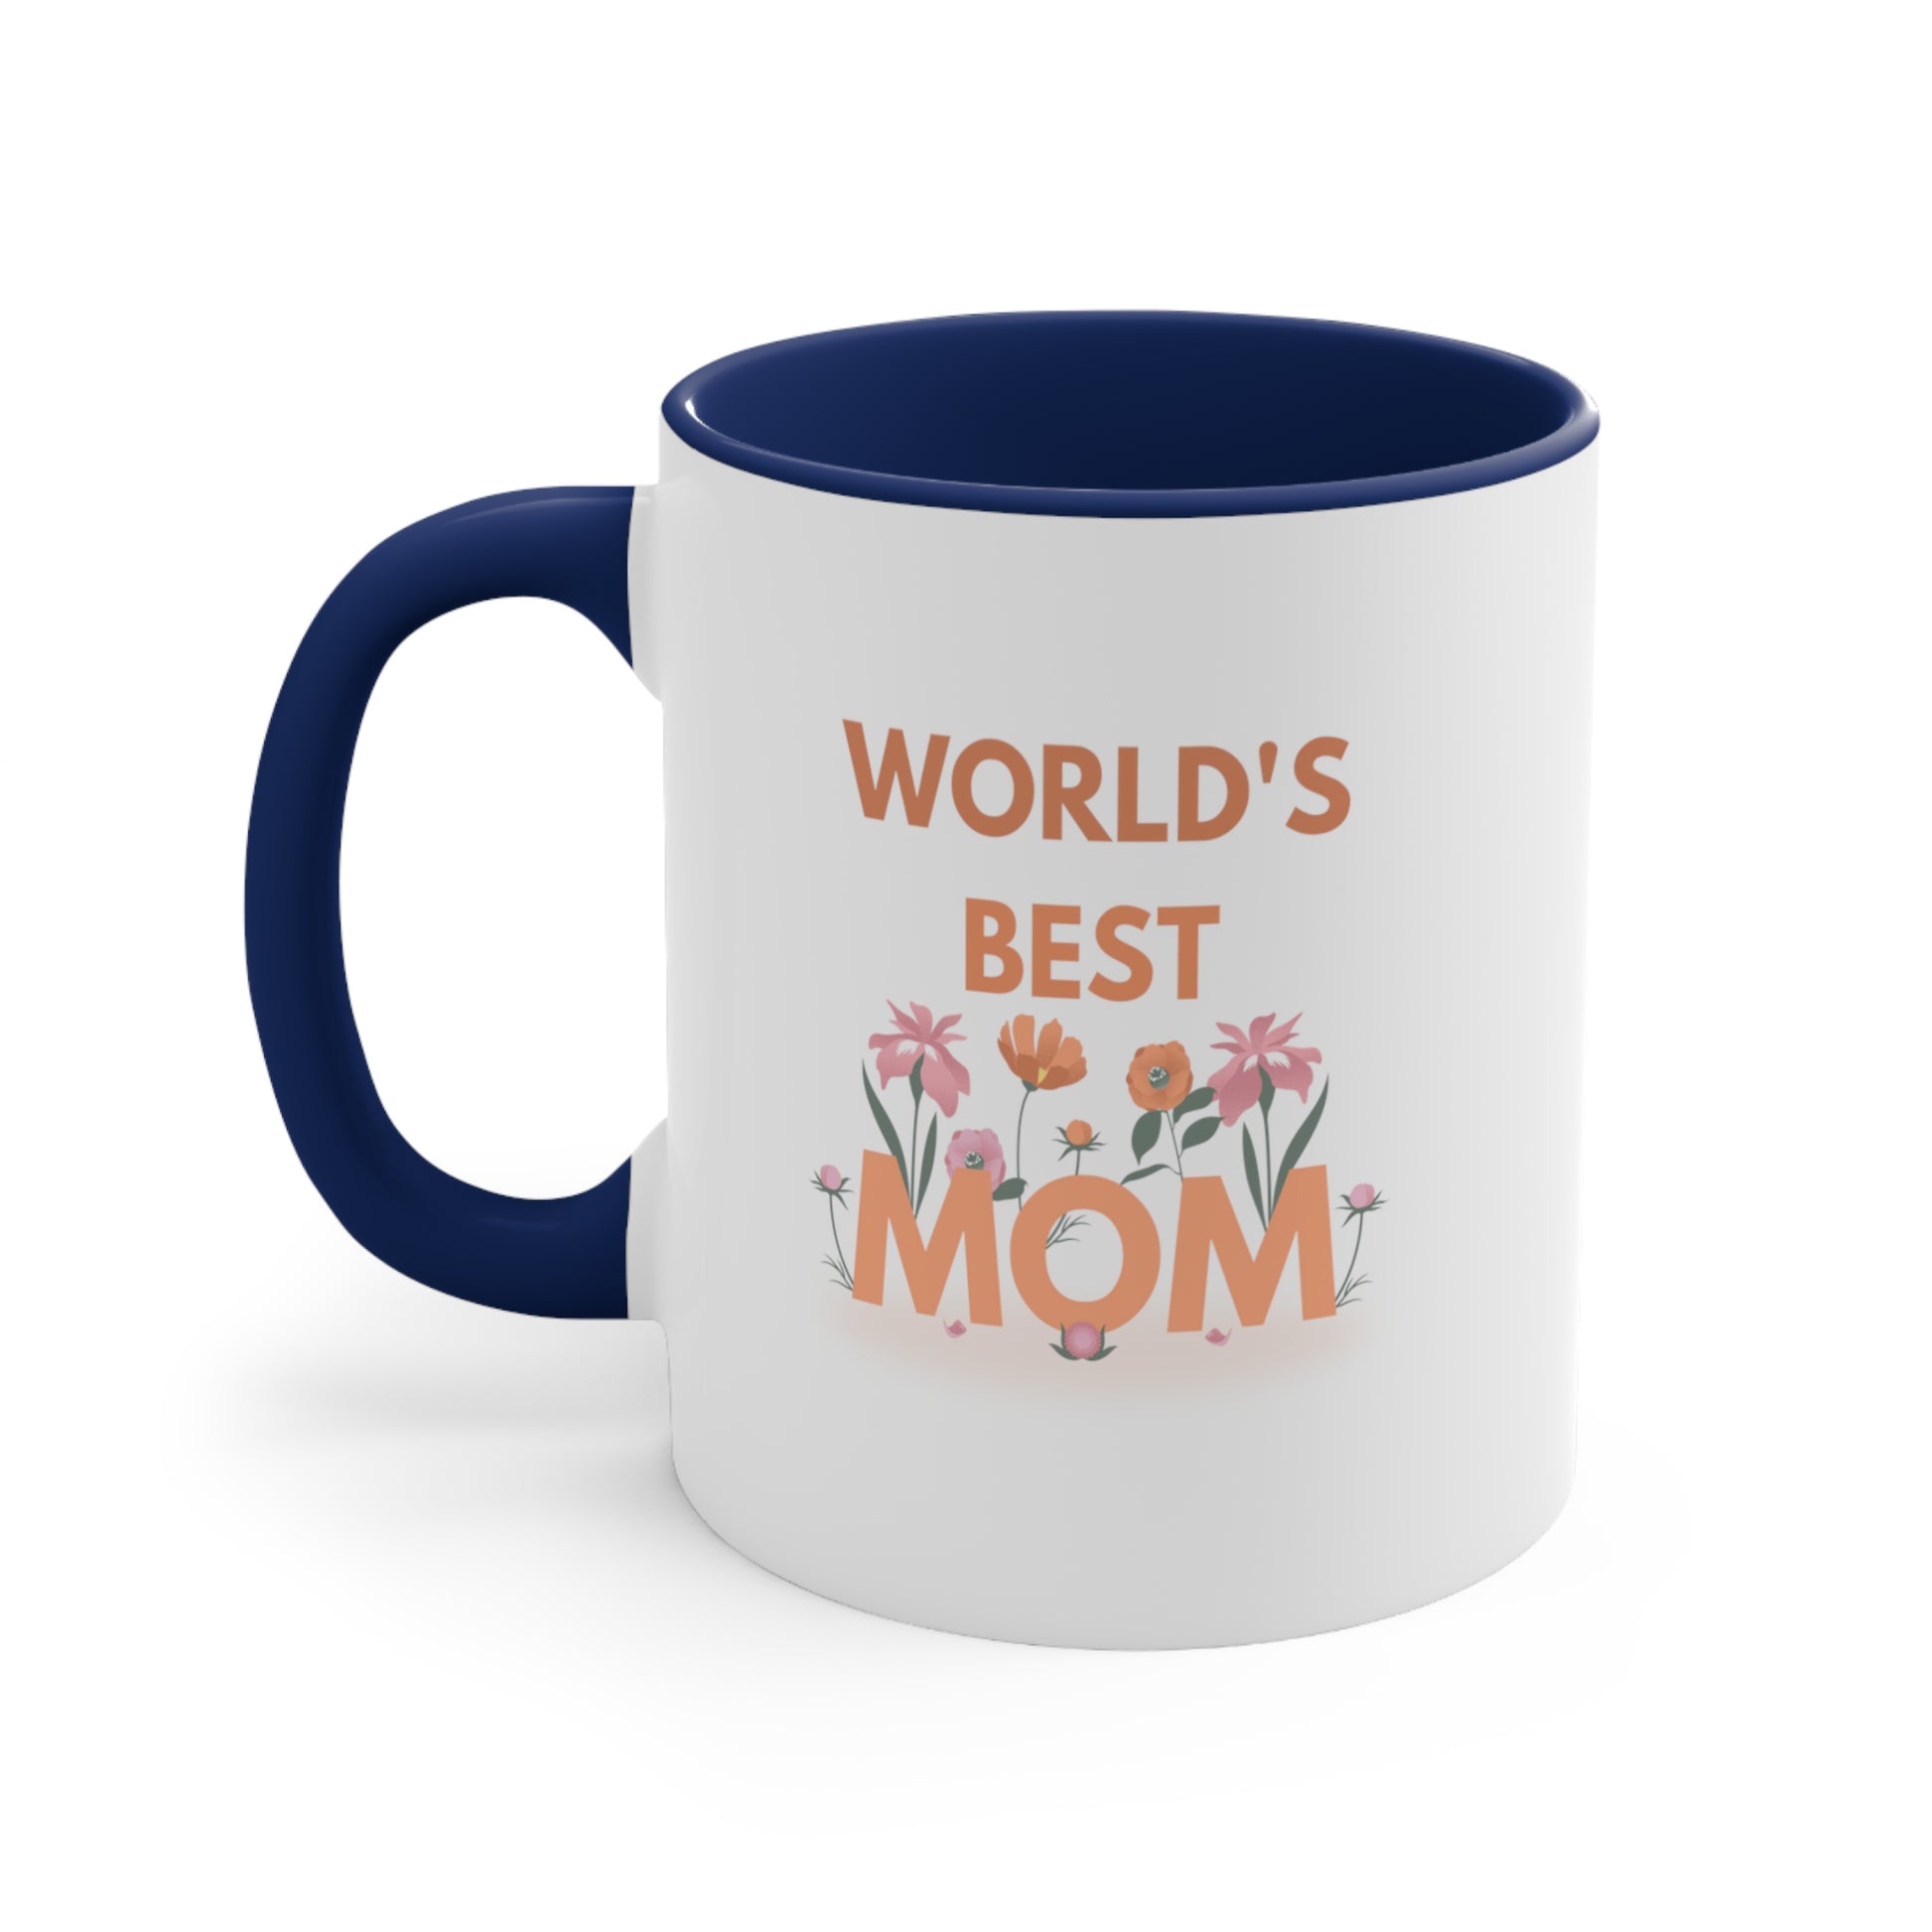 Navy and white world's best mom mug